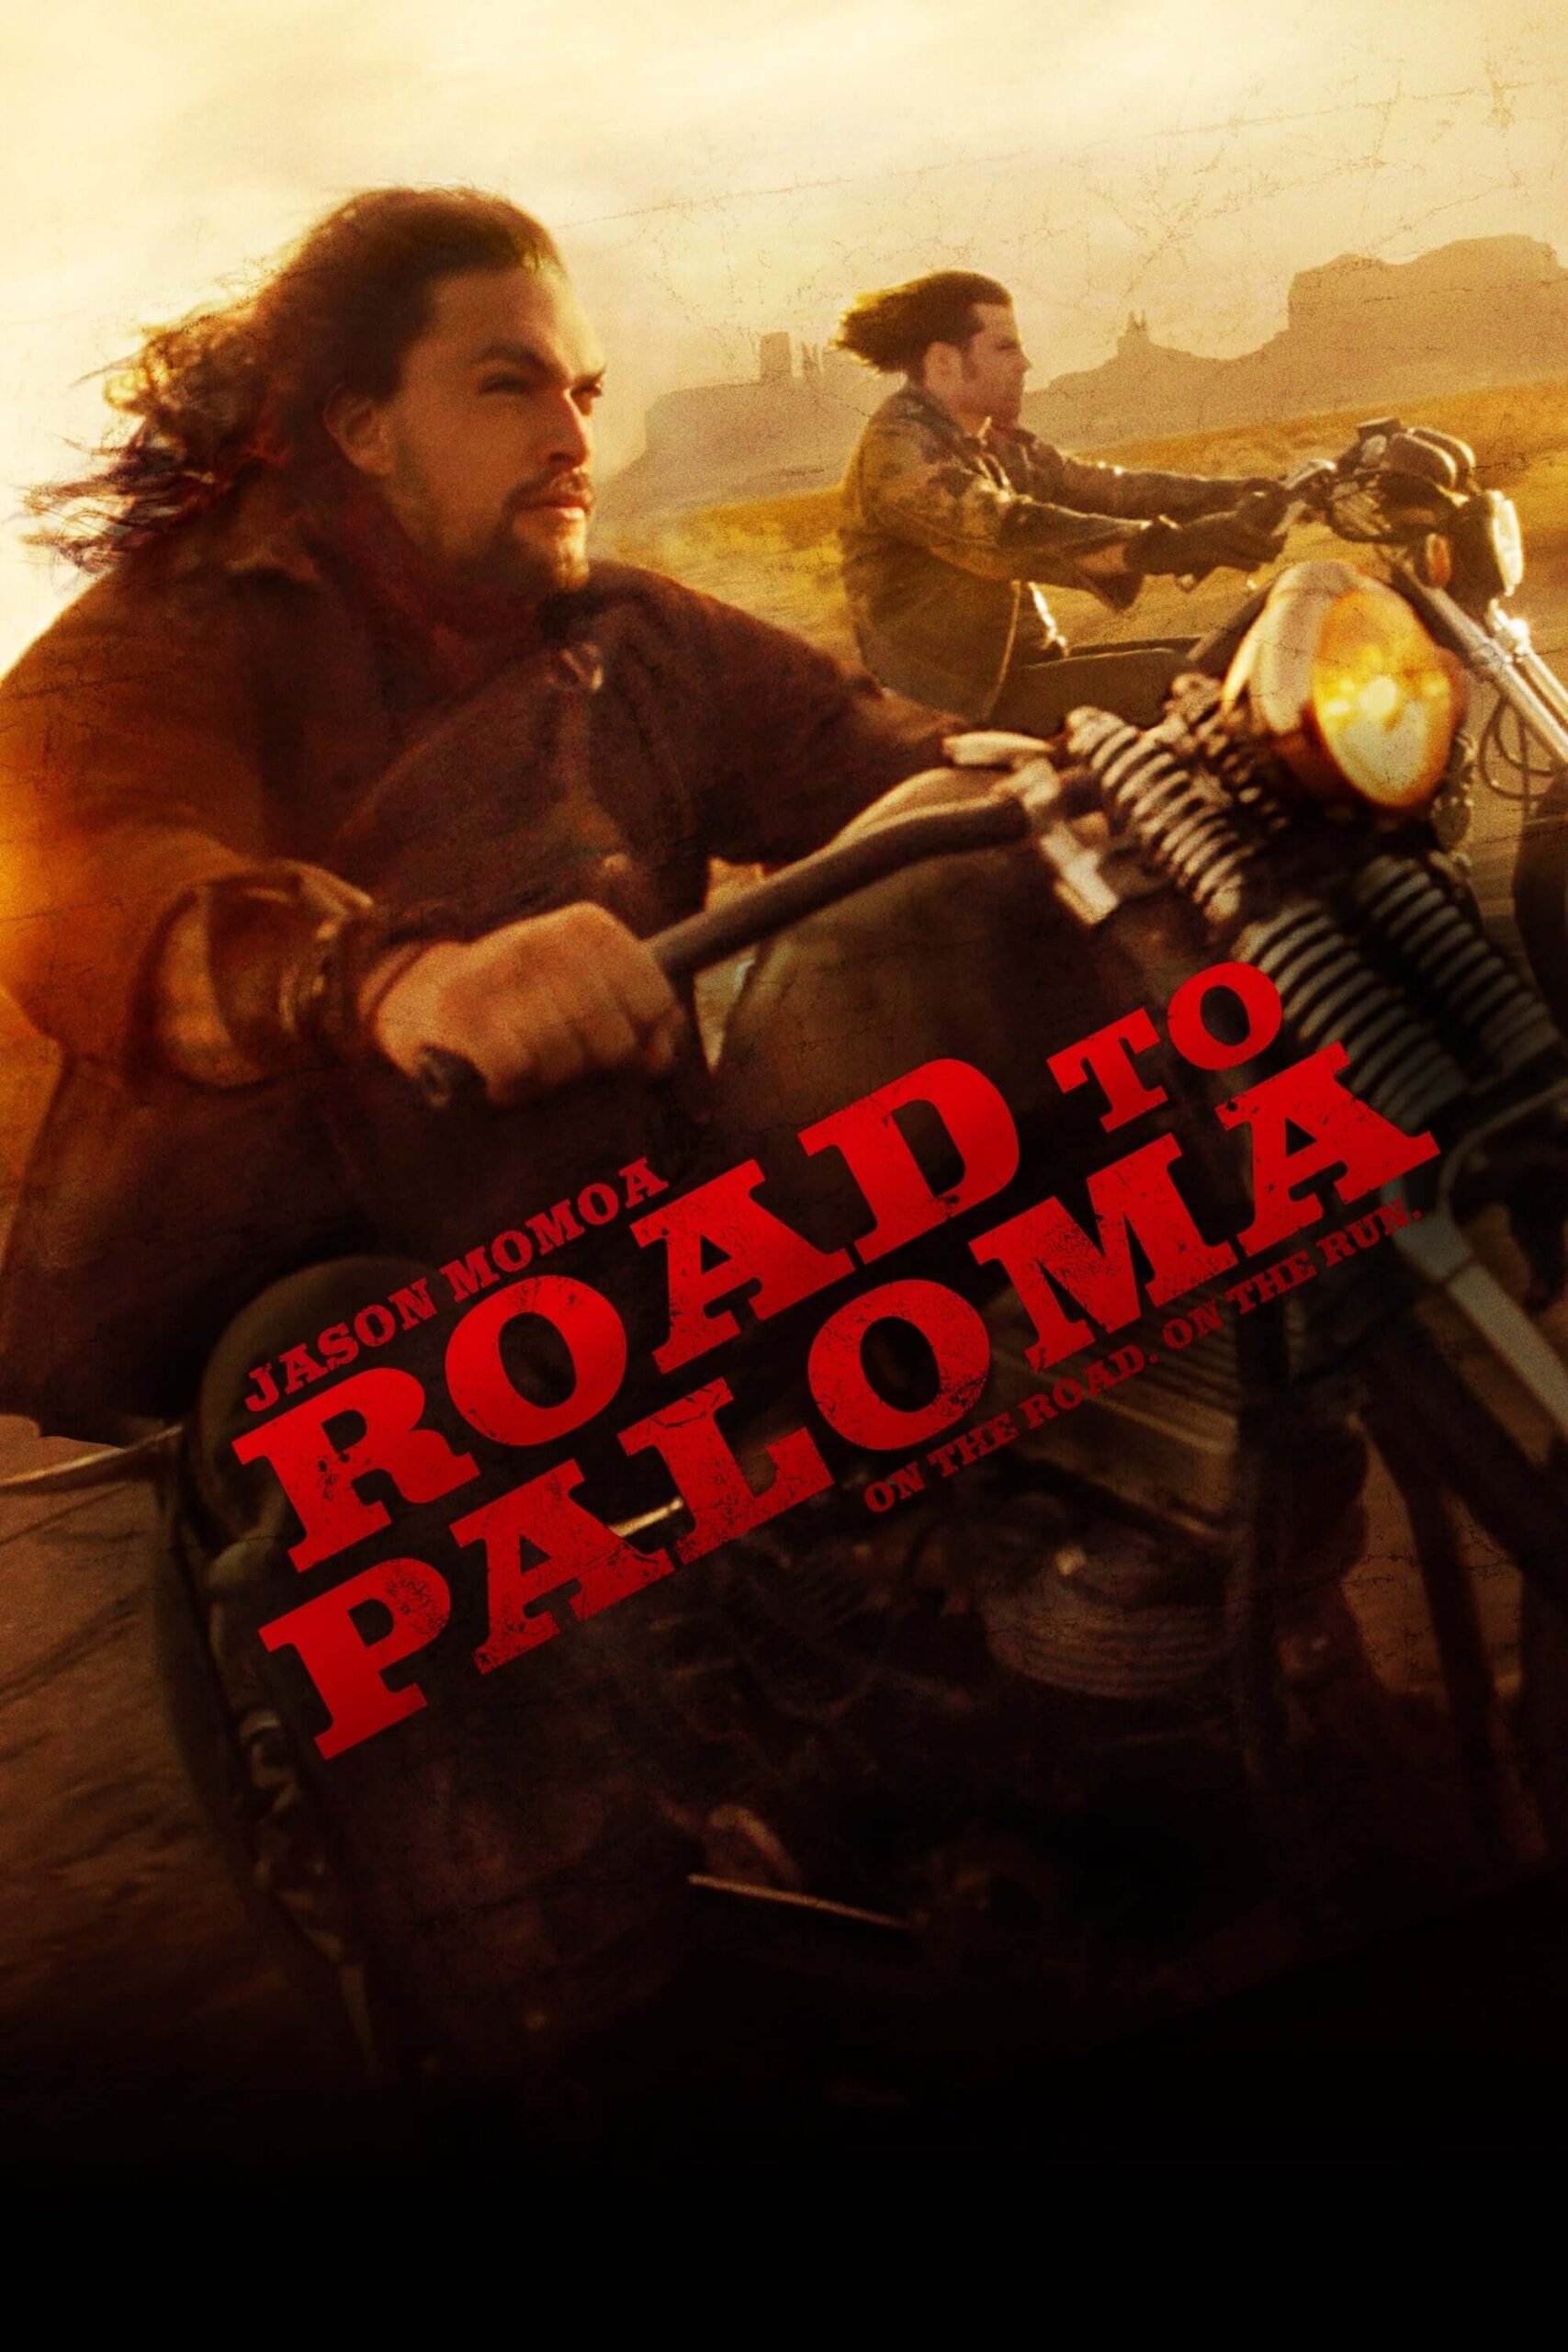 جادهٔ پالوما (Road to Paloma)